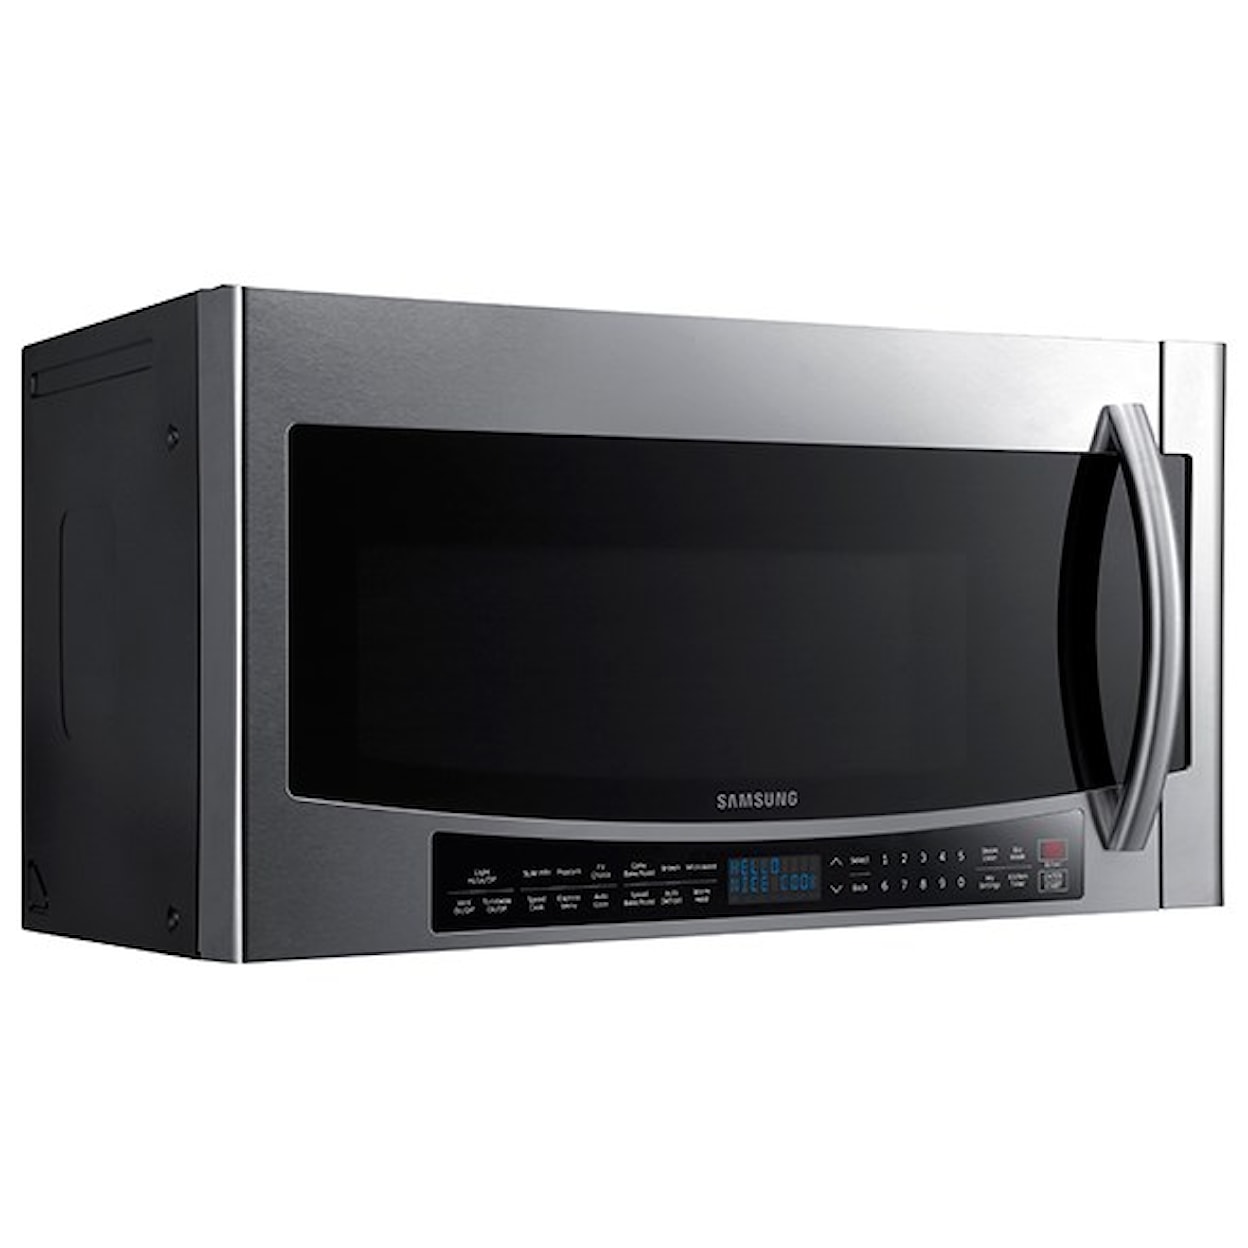 Samsung Appliances Microwaves 1.7 Cu.Ft. Over Range Convection Microwave